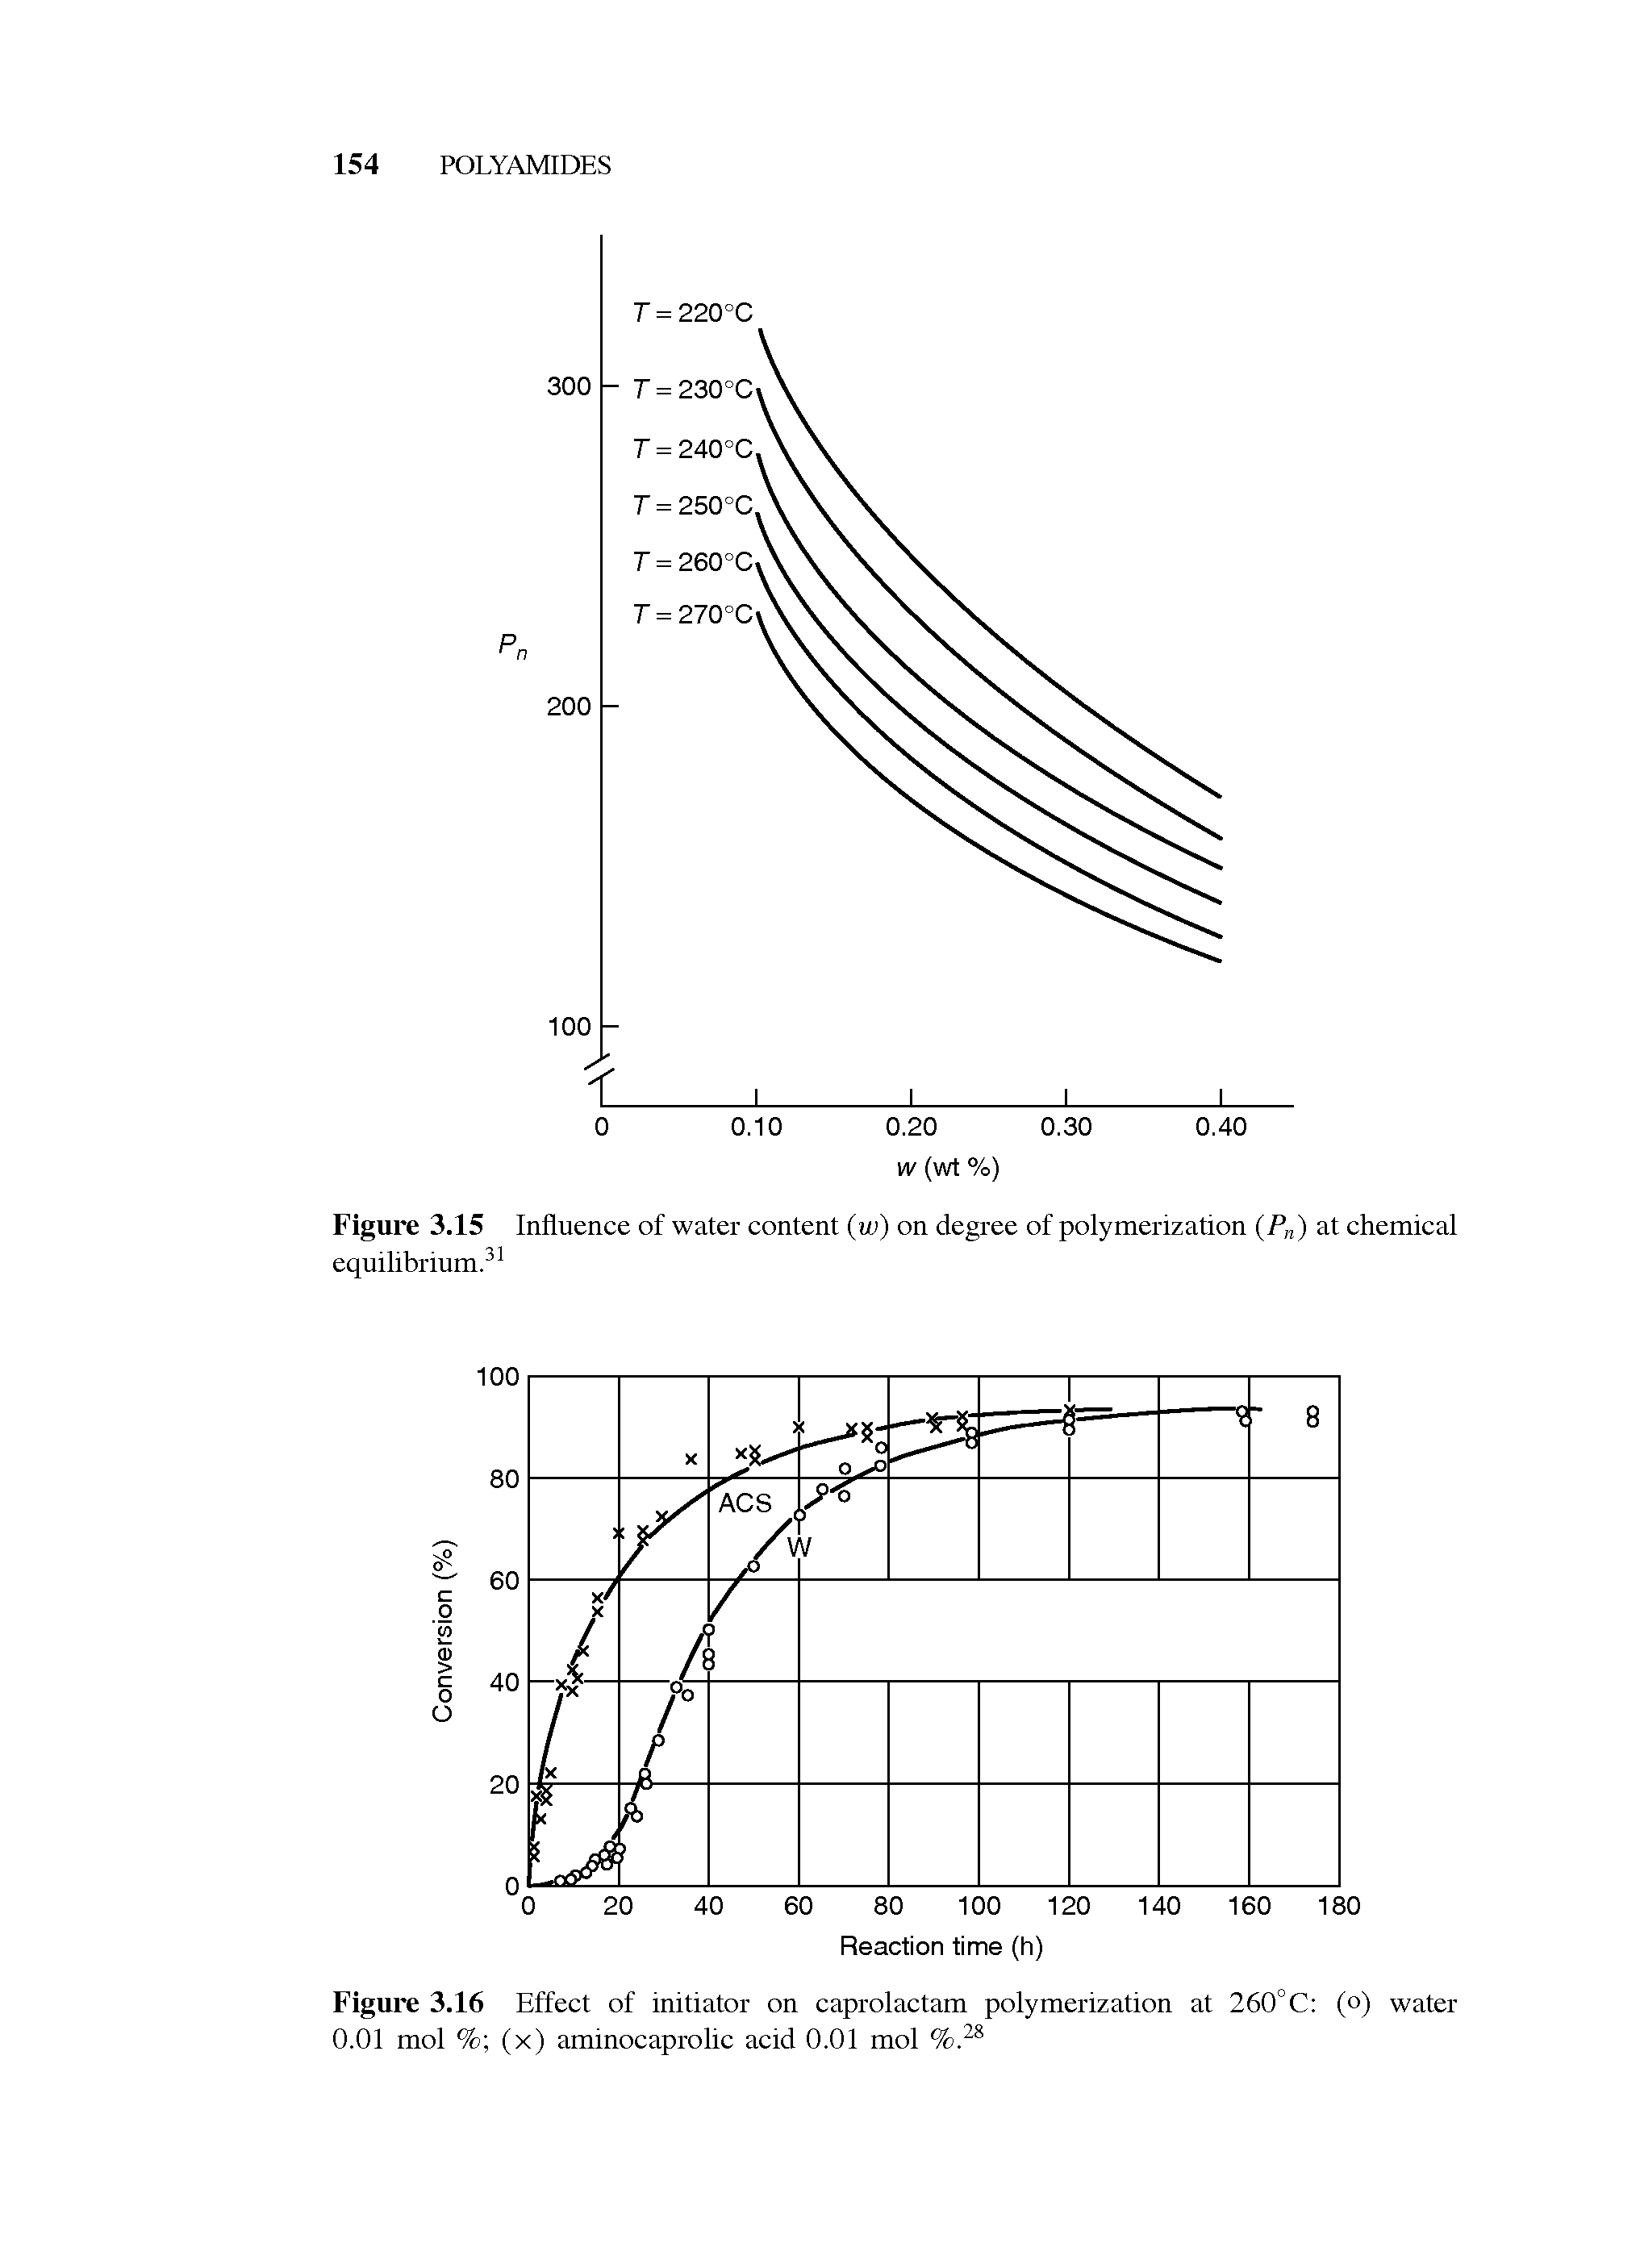 Figure 3.16 Effect of initiator on caprolactam polymerization at 260°C (o) water 0.01 mol % (x) aminocaprolic acid 0.01 mol %.28...